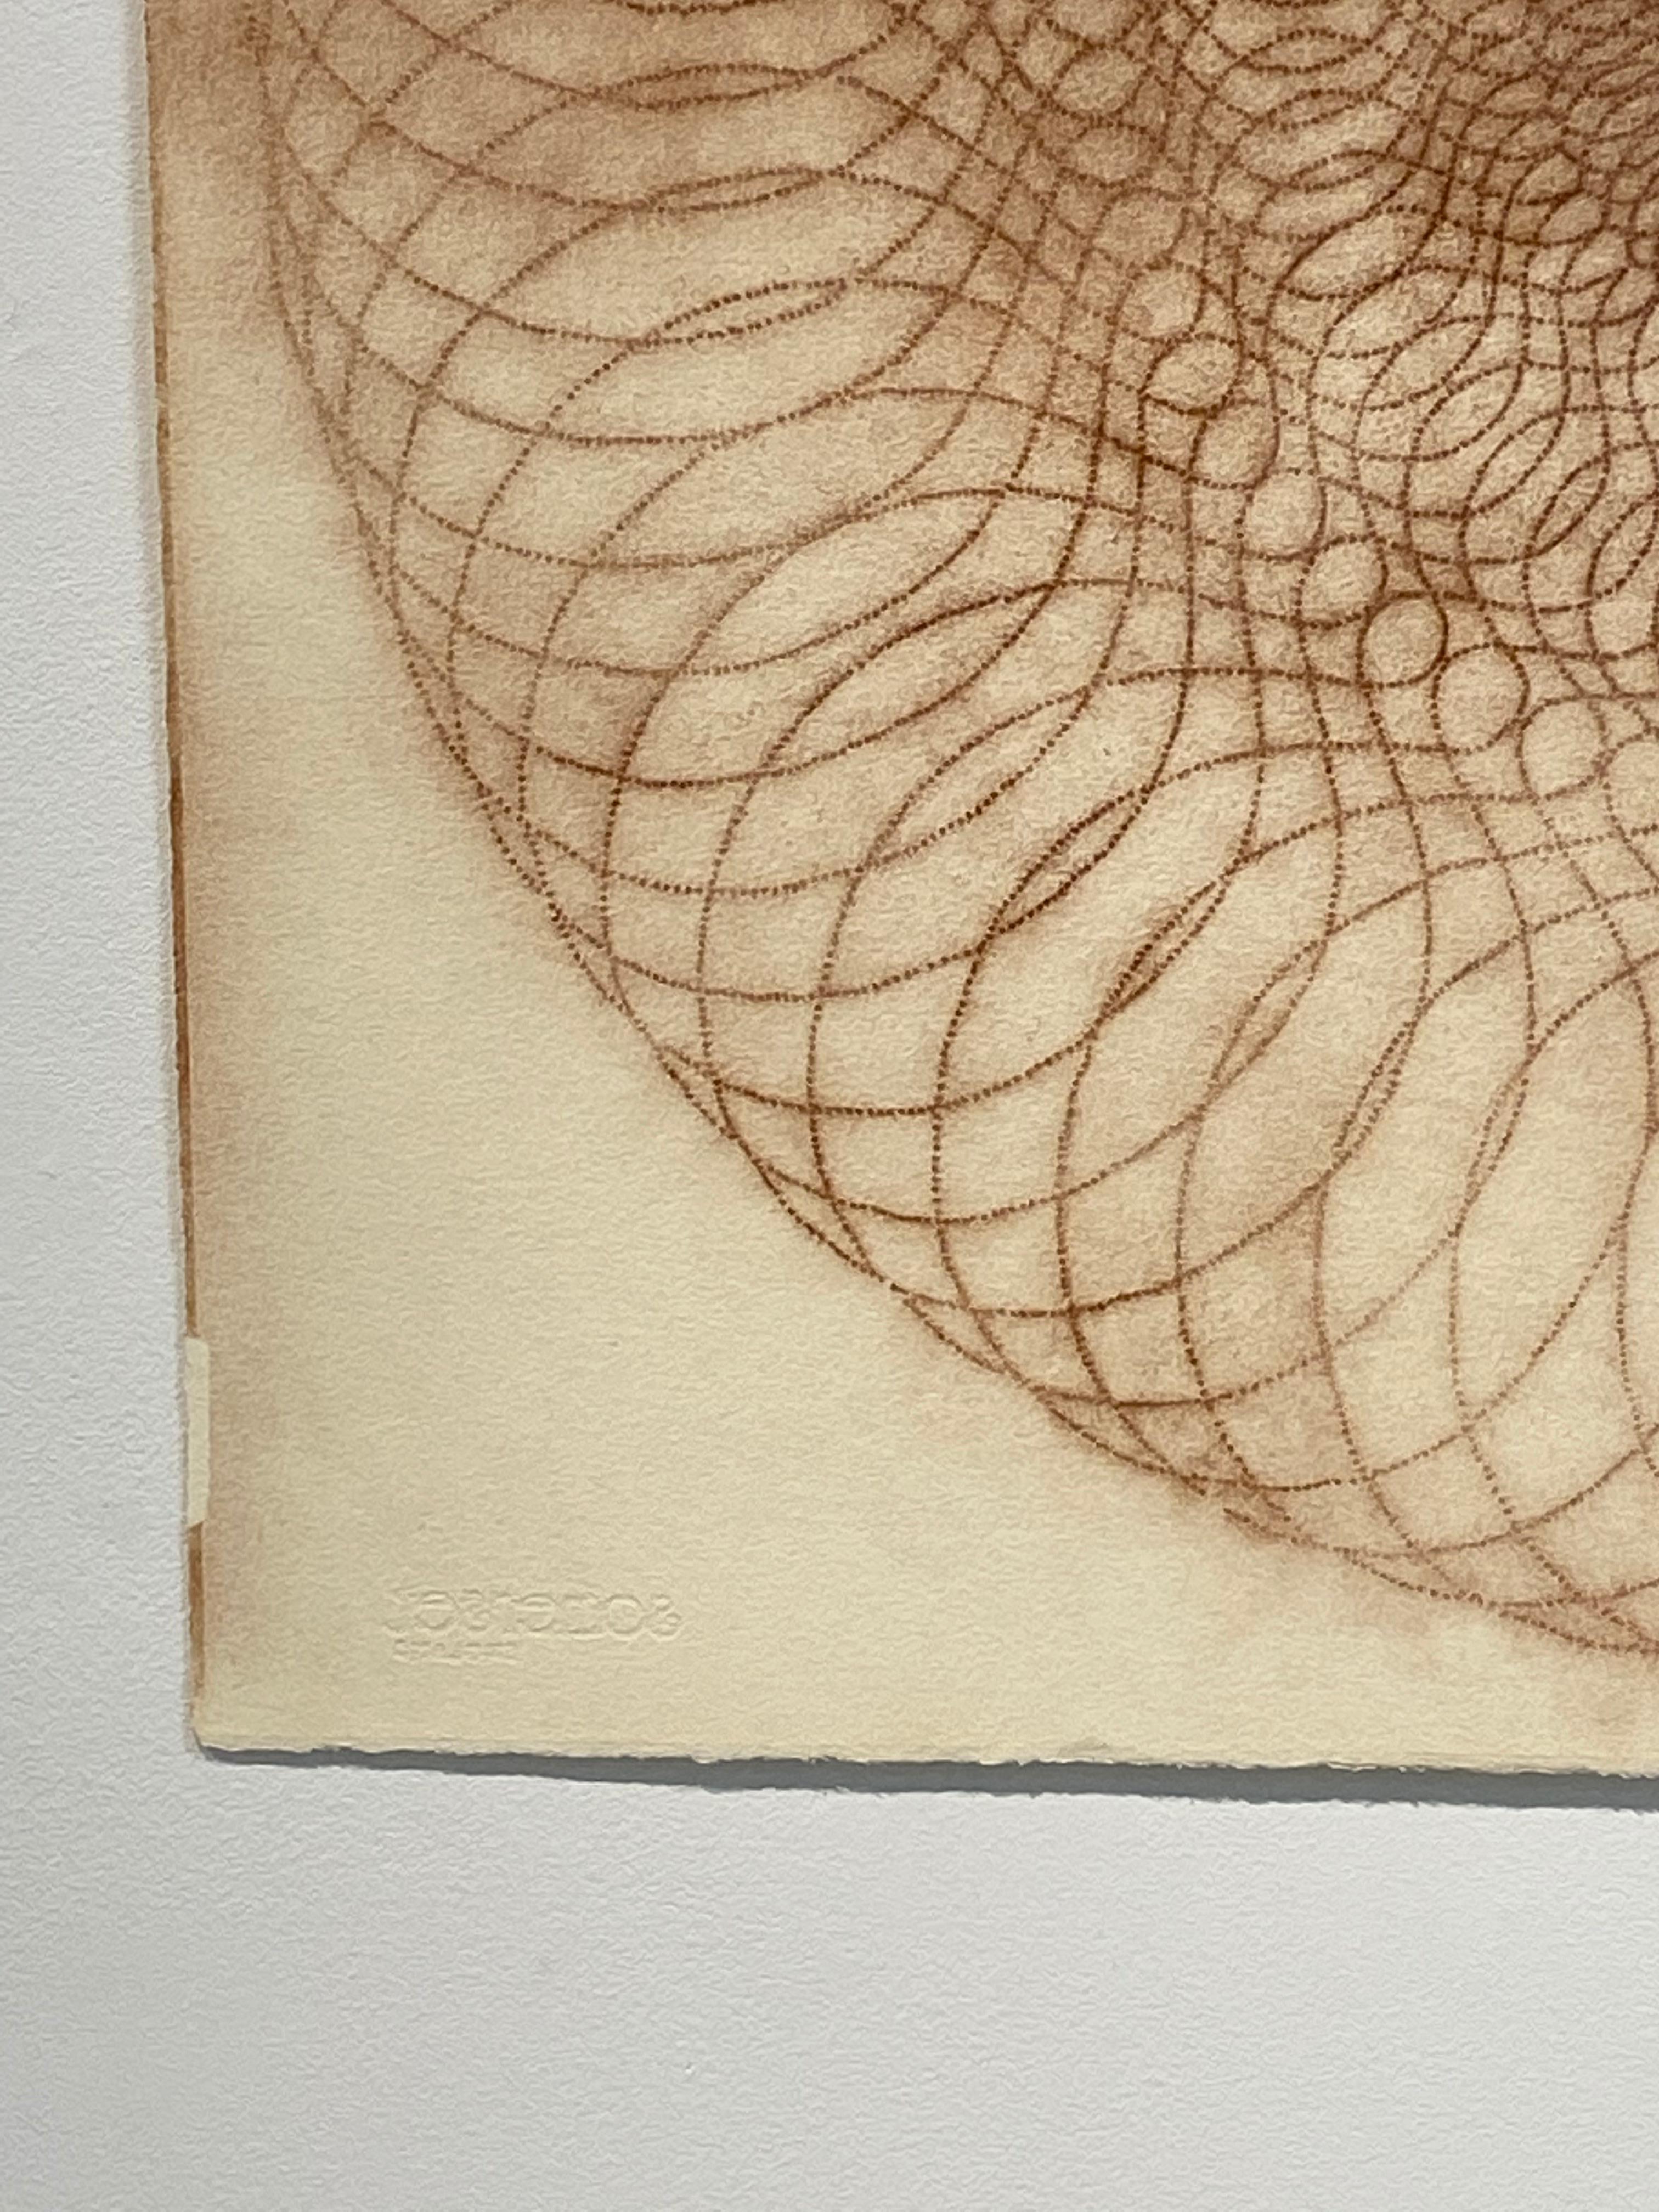 Exotic Hex Series 111 07 2, Reddish Brown Circular Mandala Line Drawing - Beige Abstract Drawing by Mary Judge